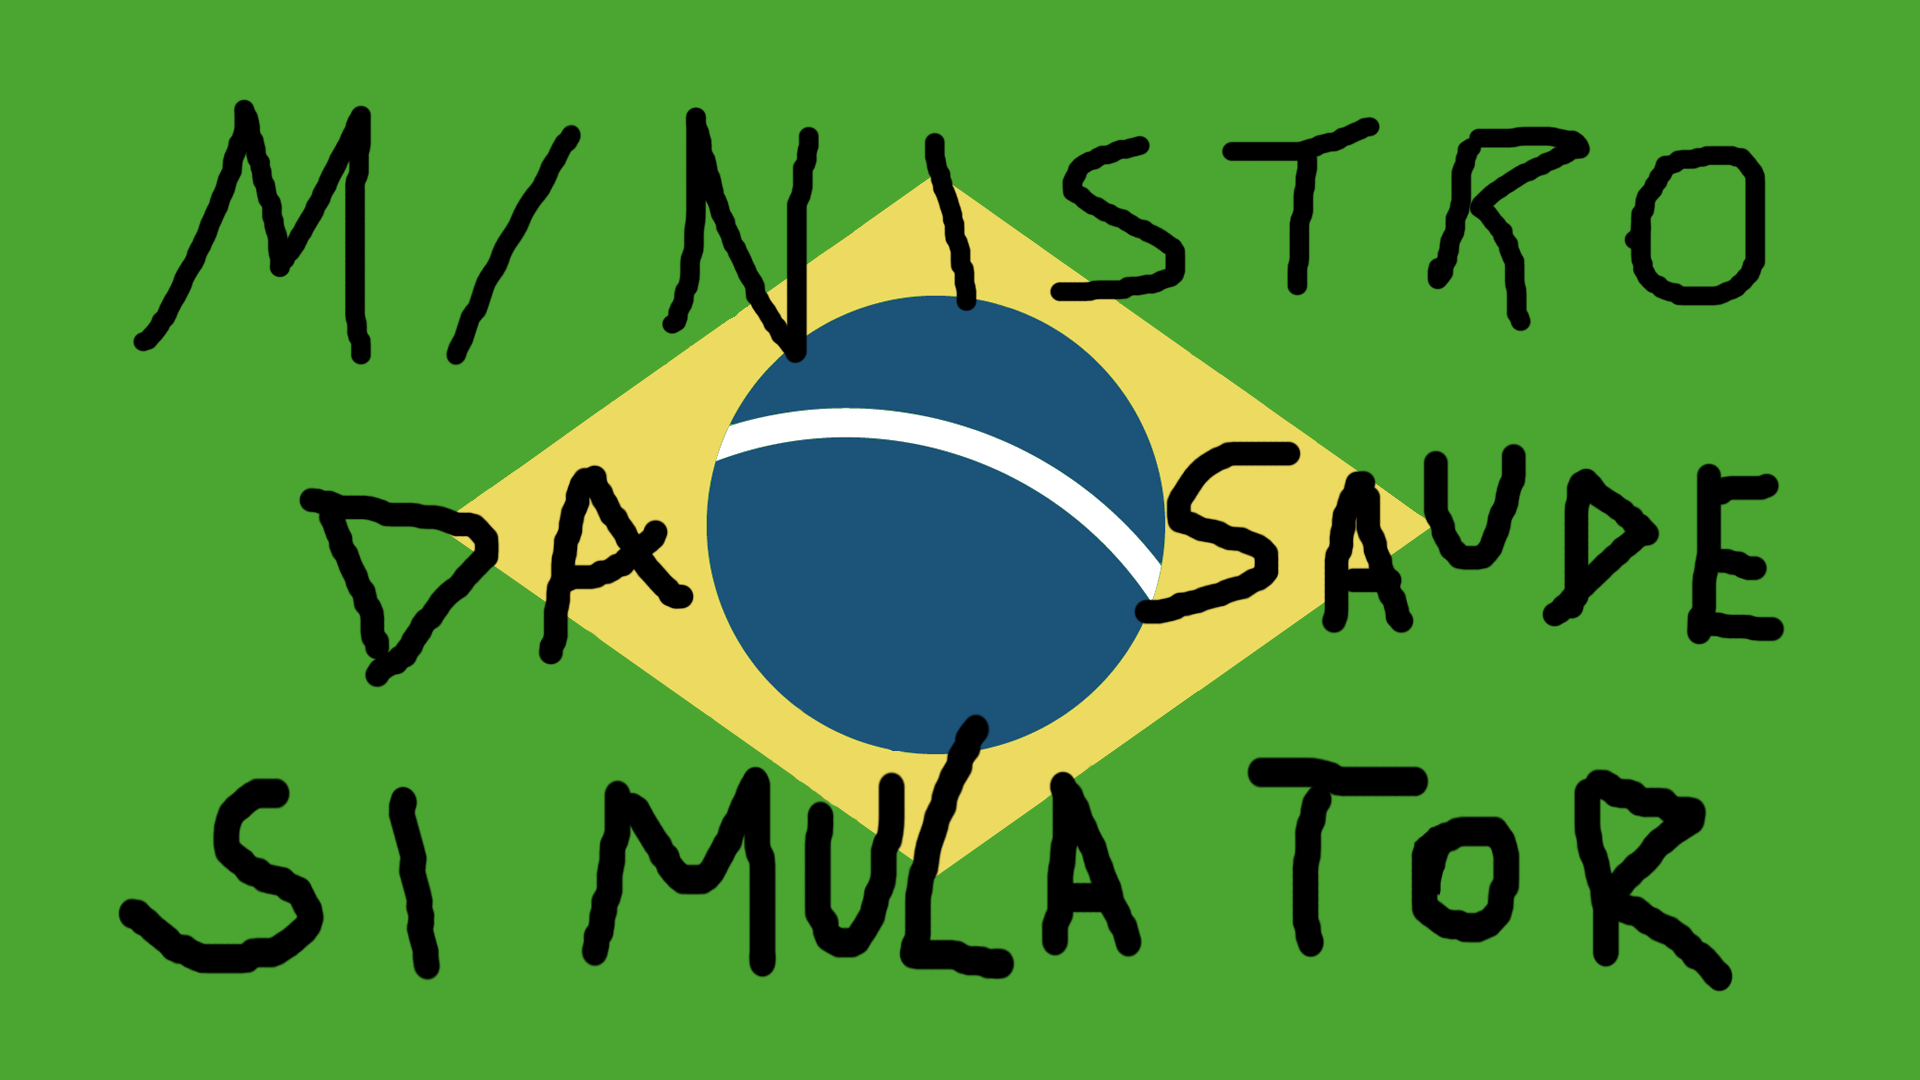 Euchre Jogatina: Yuker Online  Game Brasileiro - Indústria de Jogos Brasil